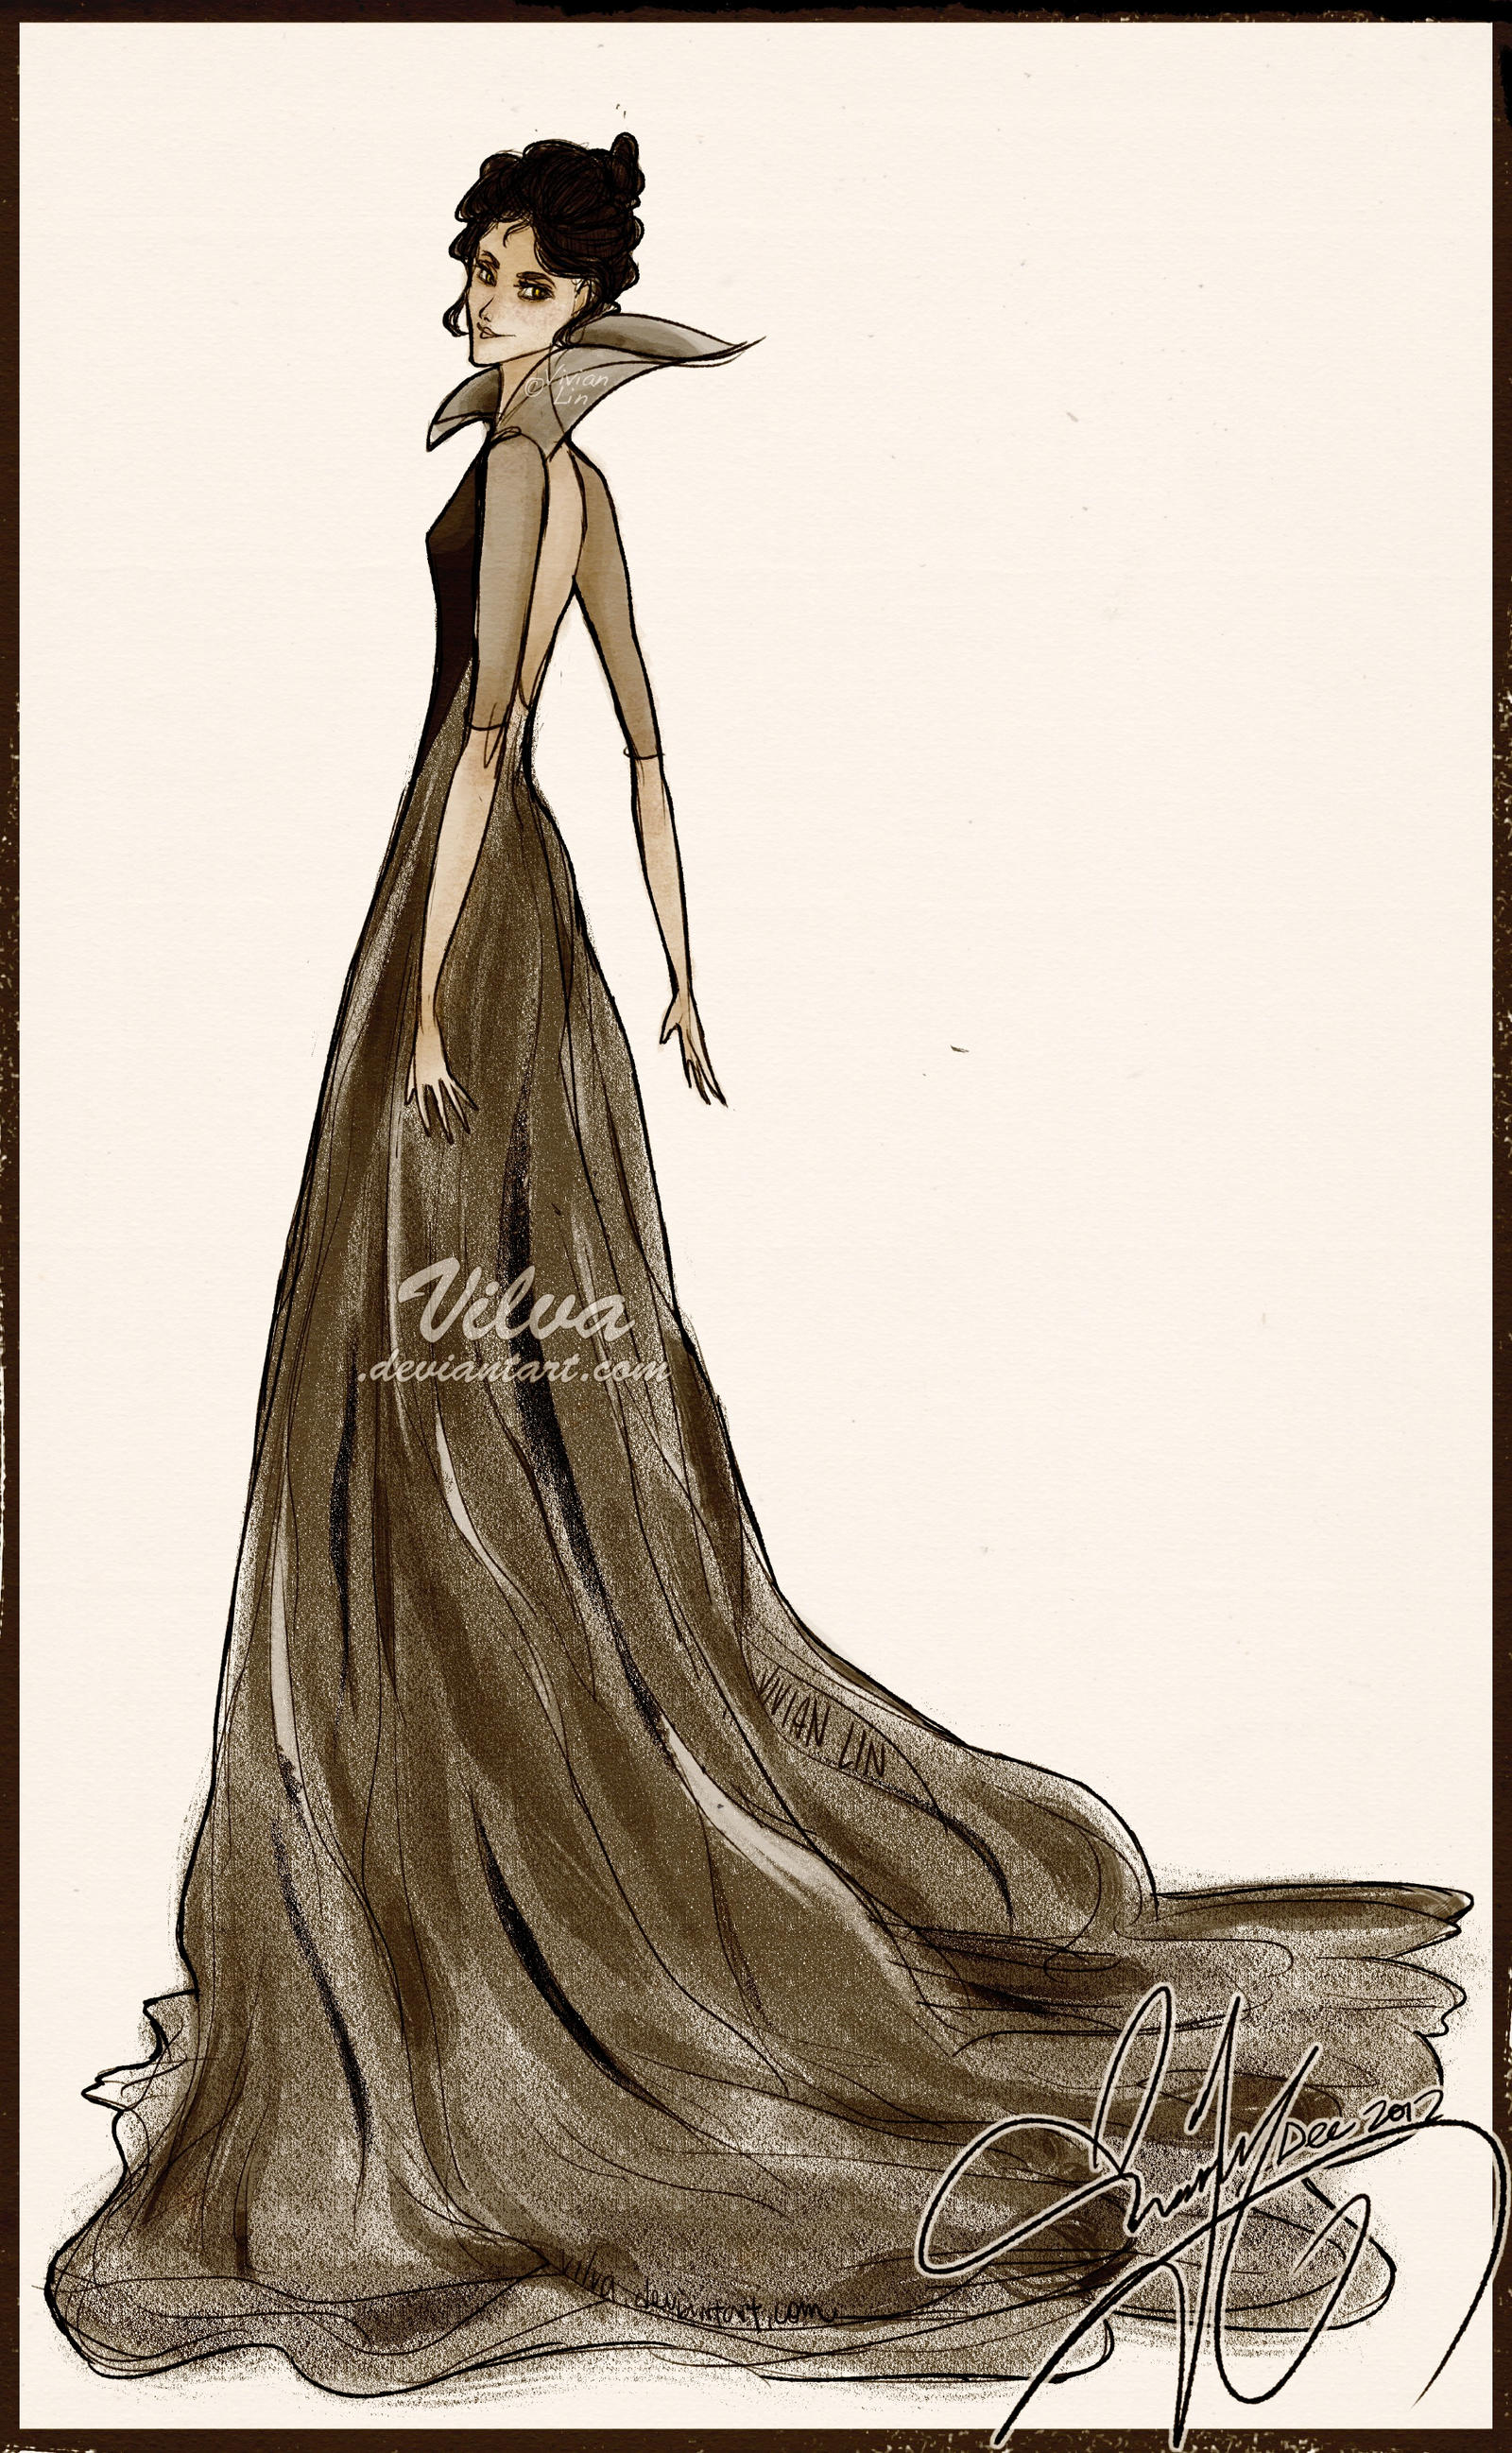 Jasmine dress design by Vilva on DeviantArt